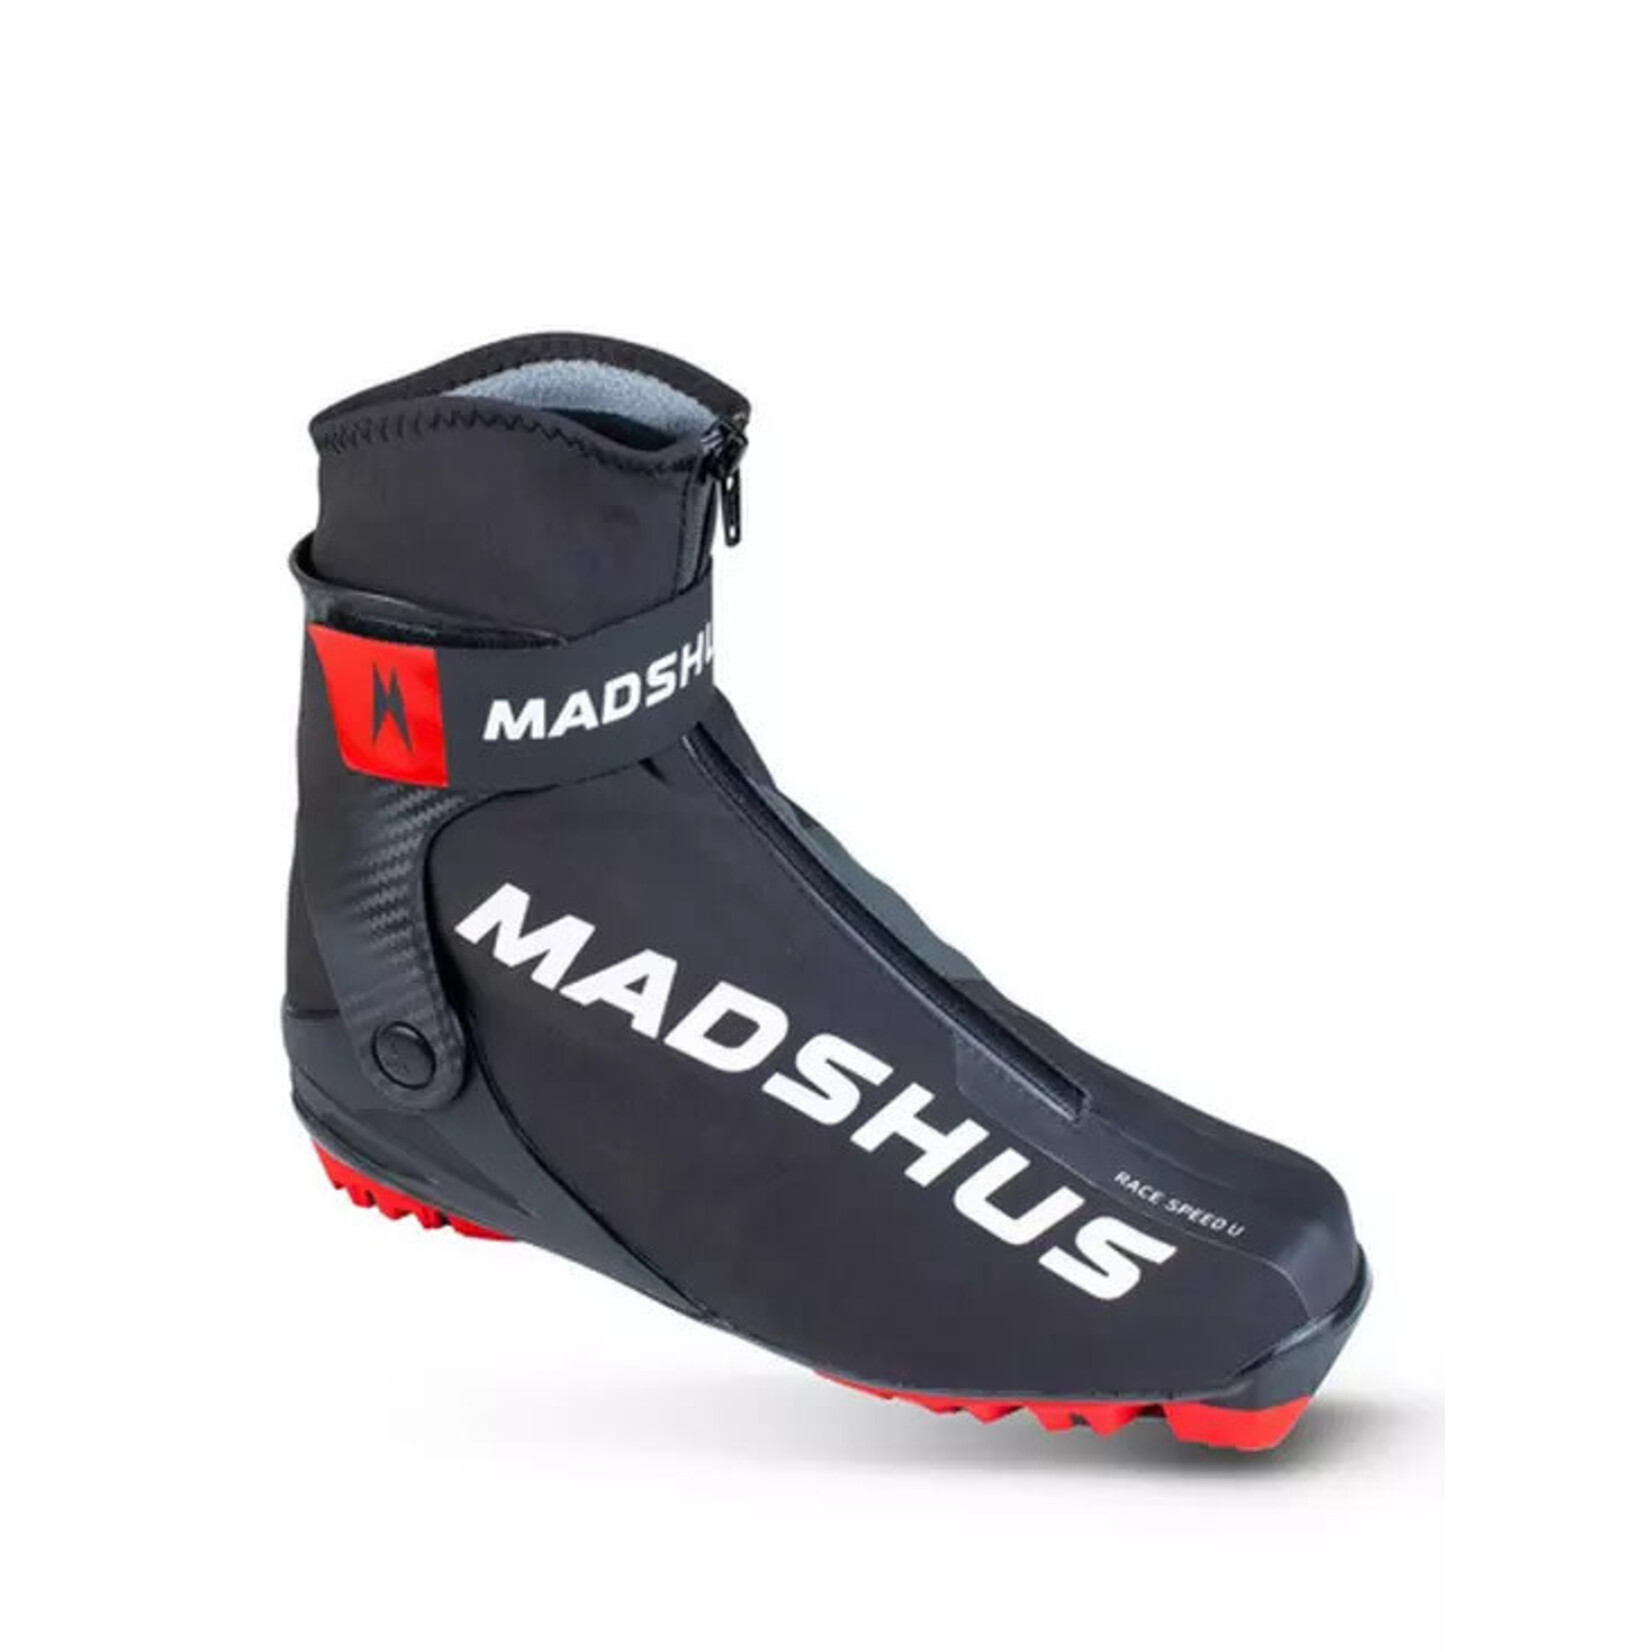 Madshus Race Speed Universal (Bottes combi de ski de fond)